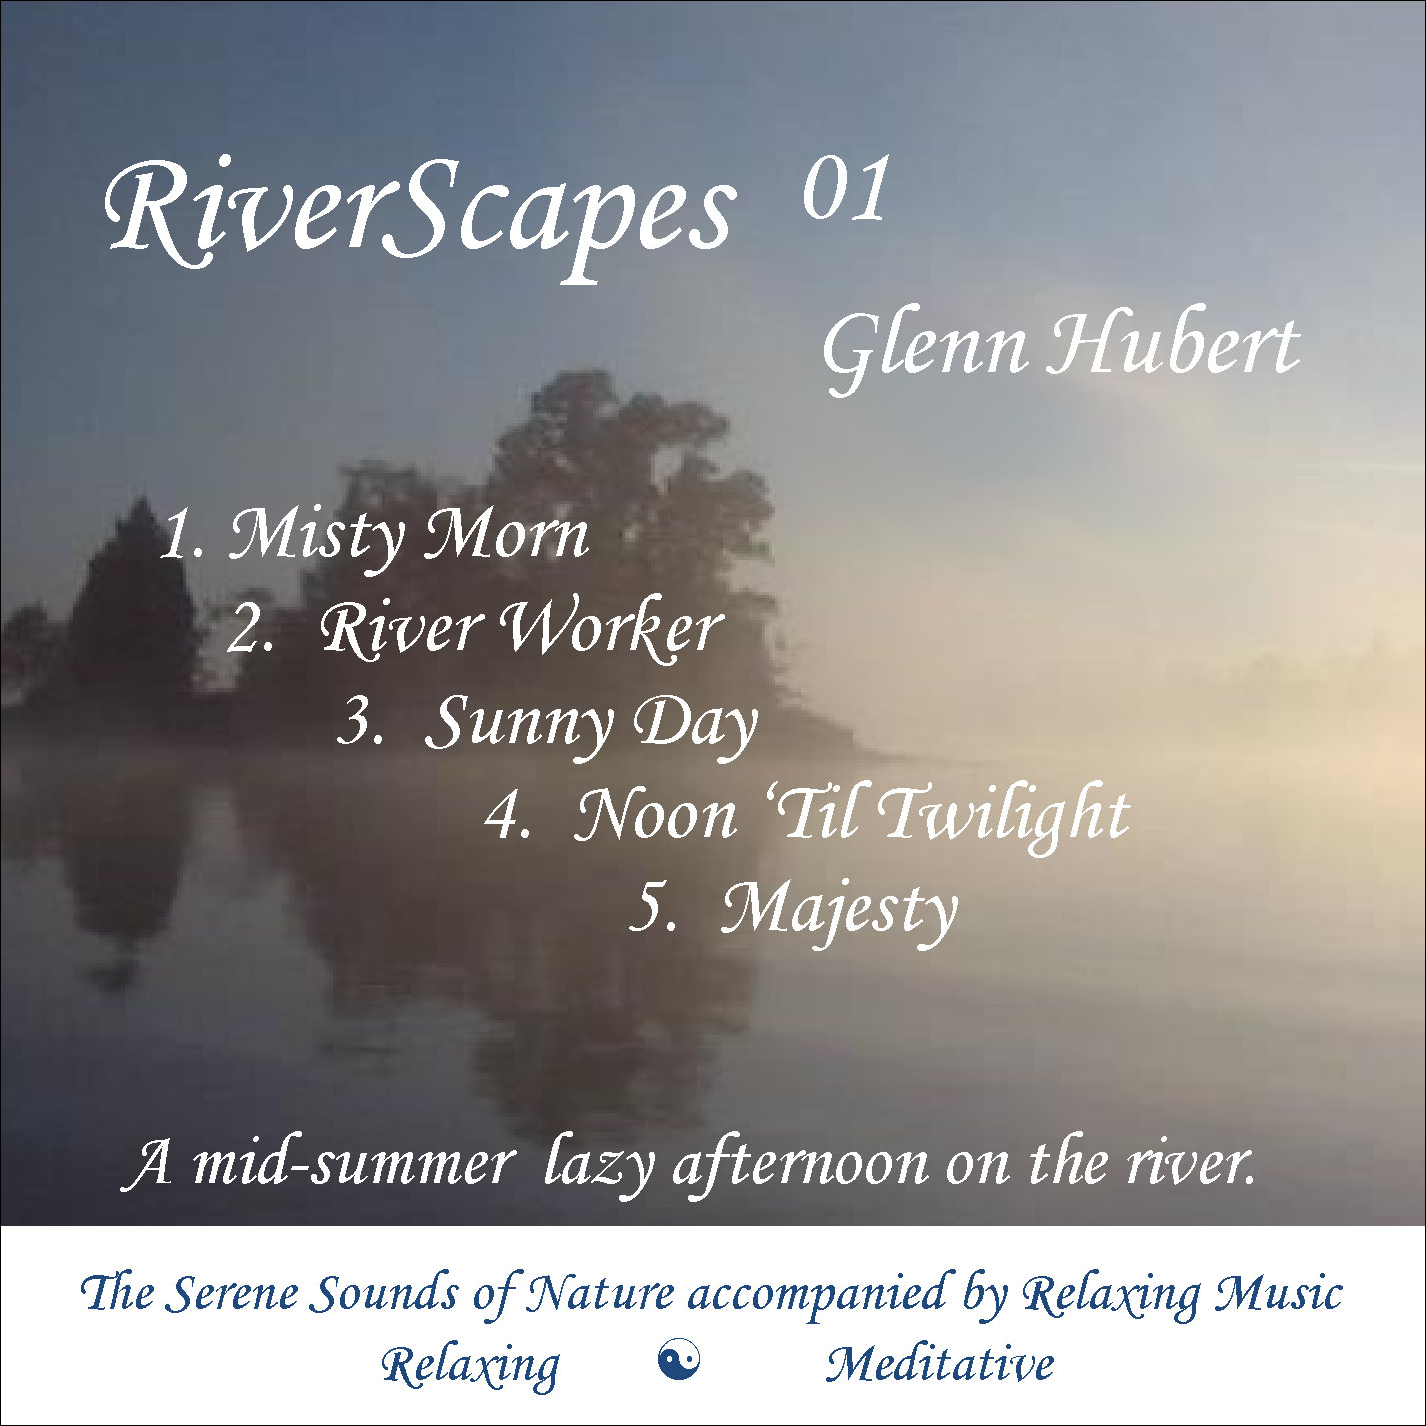 RiverScapes 01 - Glenn Hubert CD front